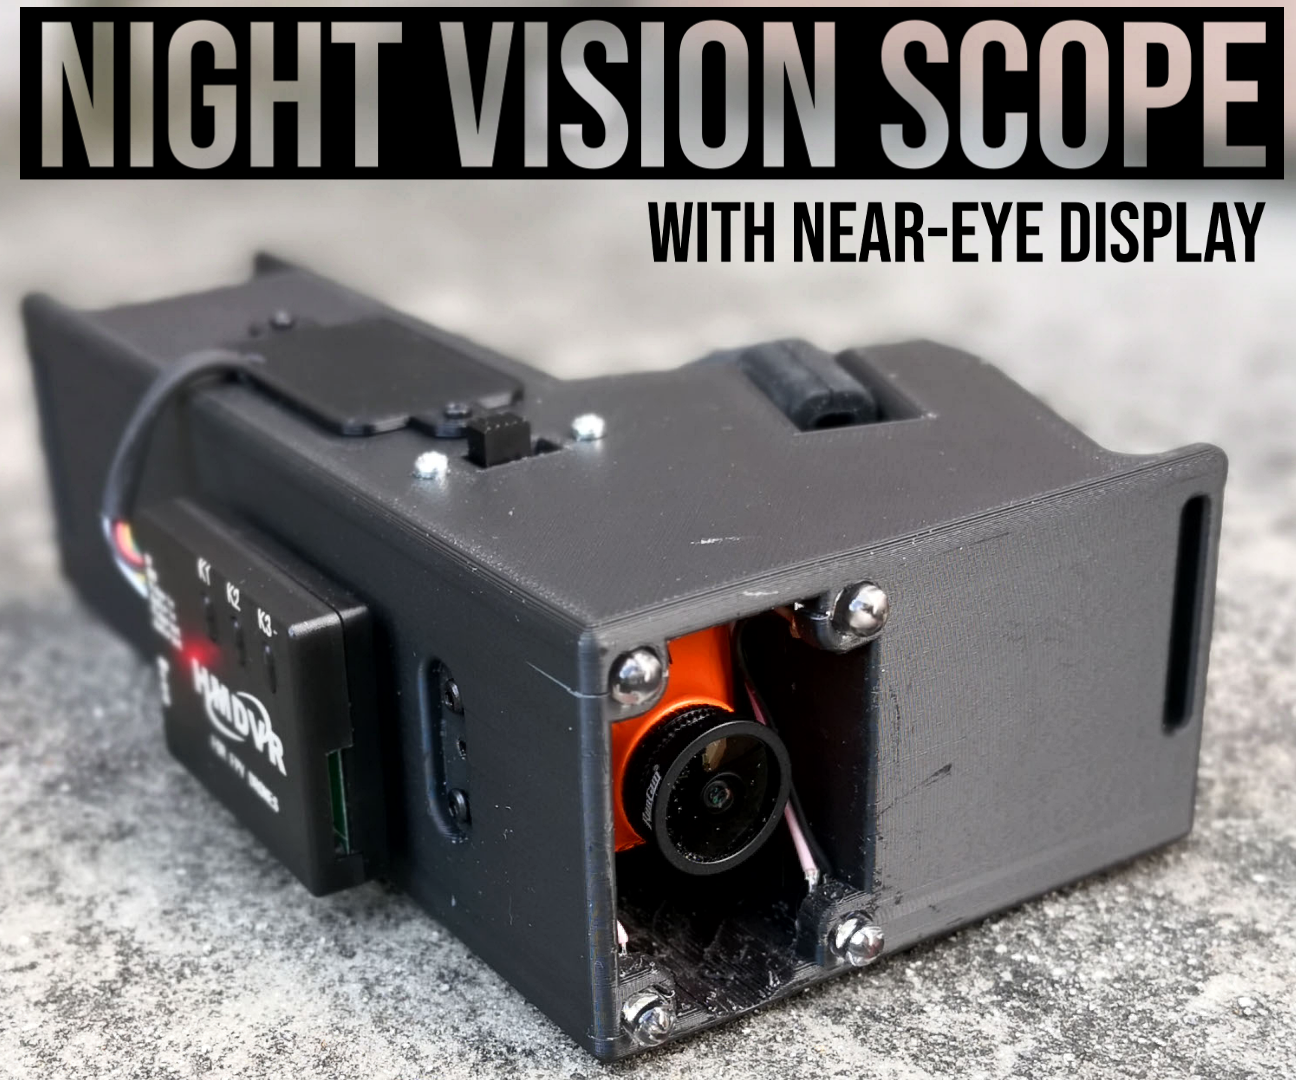 Night Vision Scope/Camera